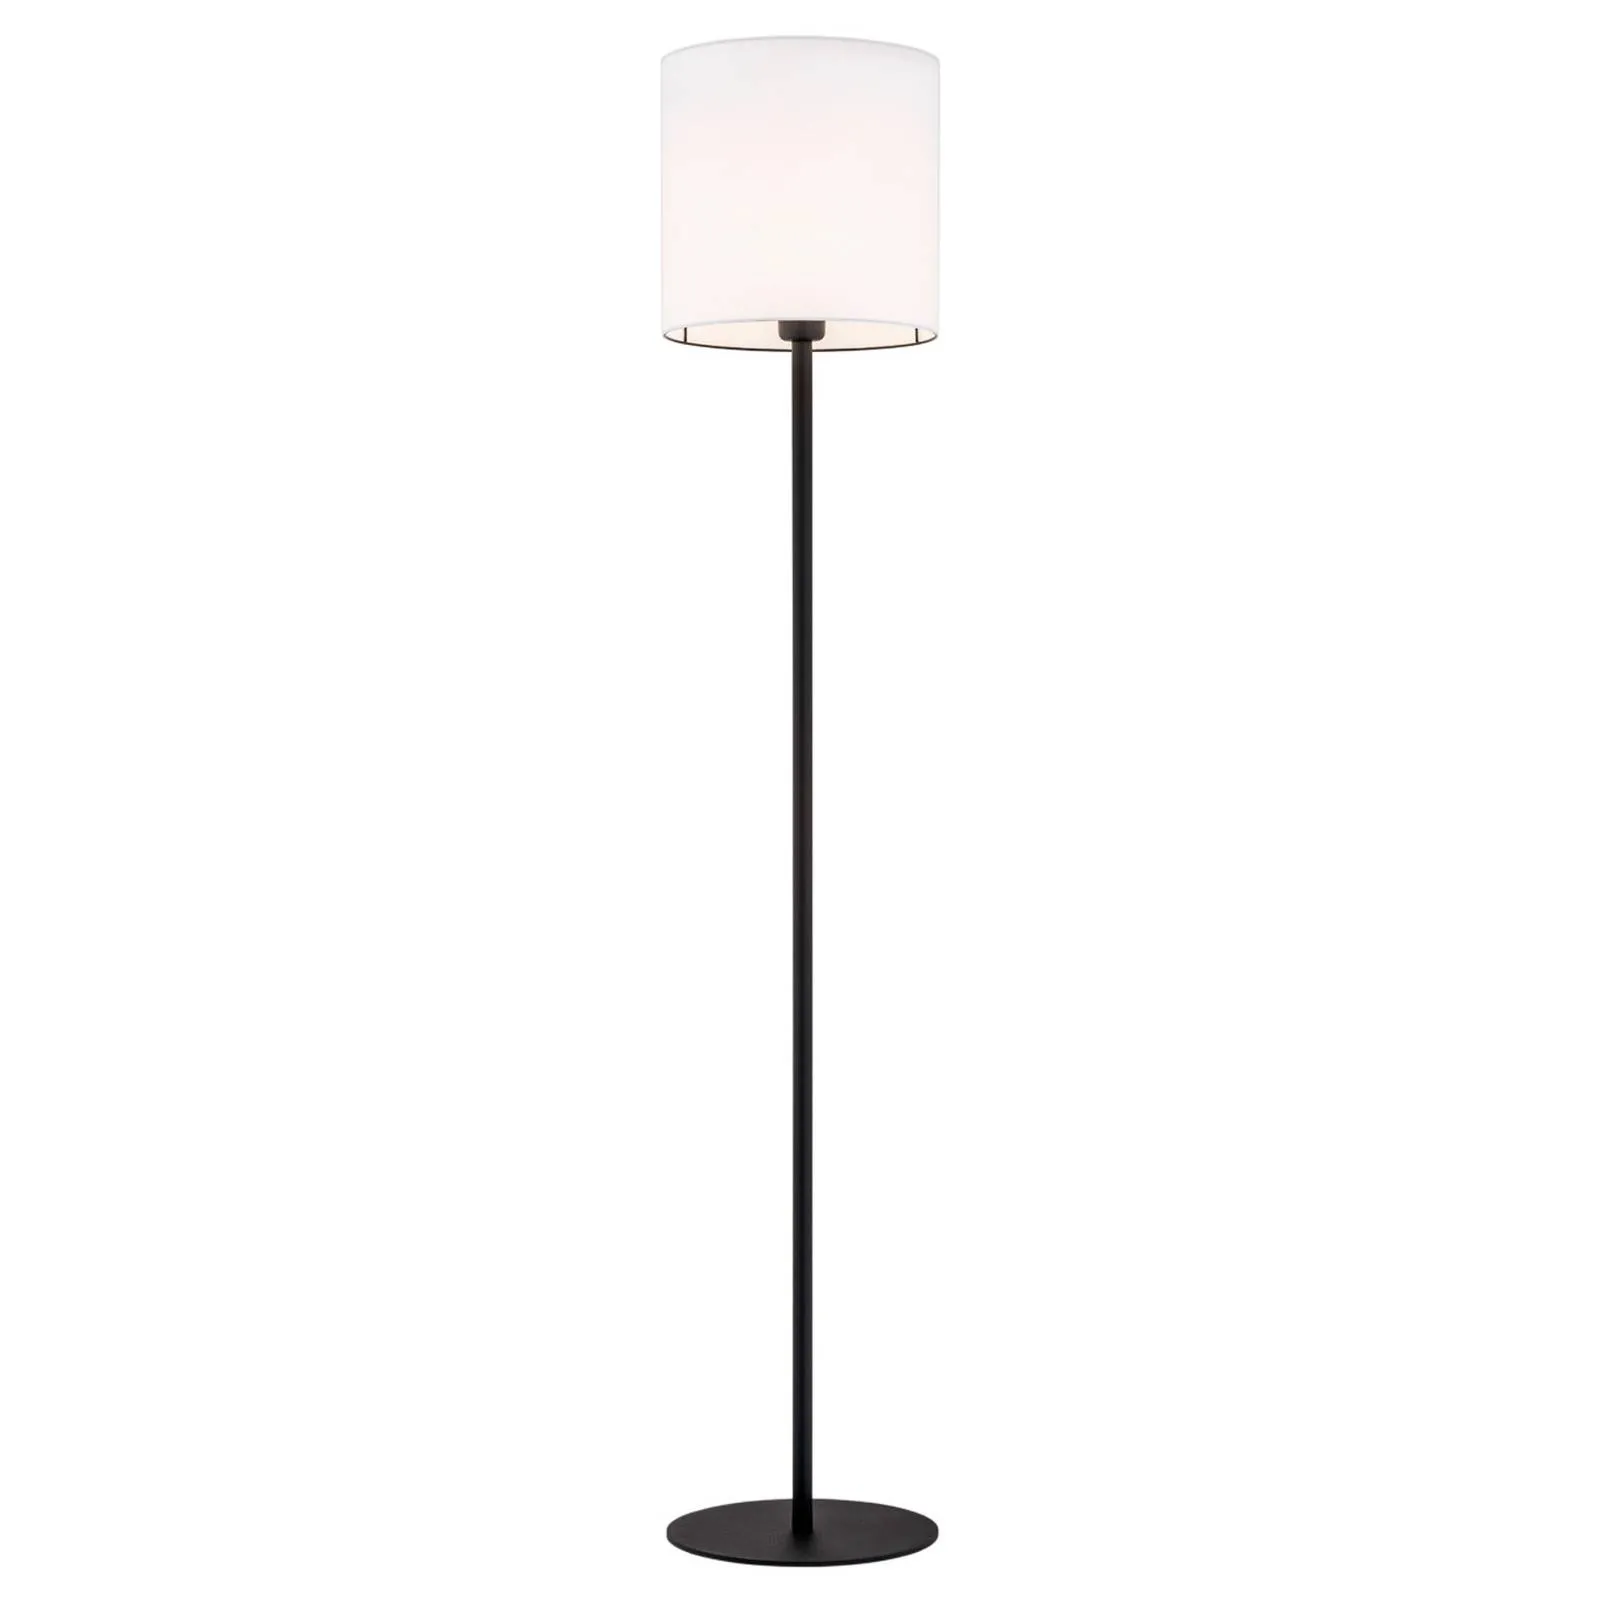 Harris floor lamp, black base, white lampshade